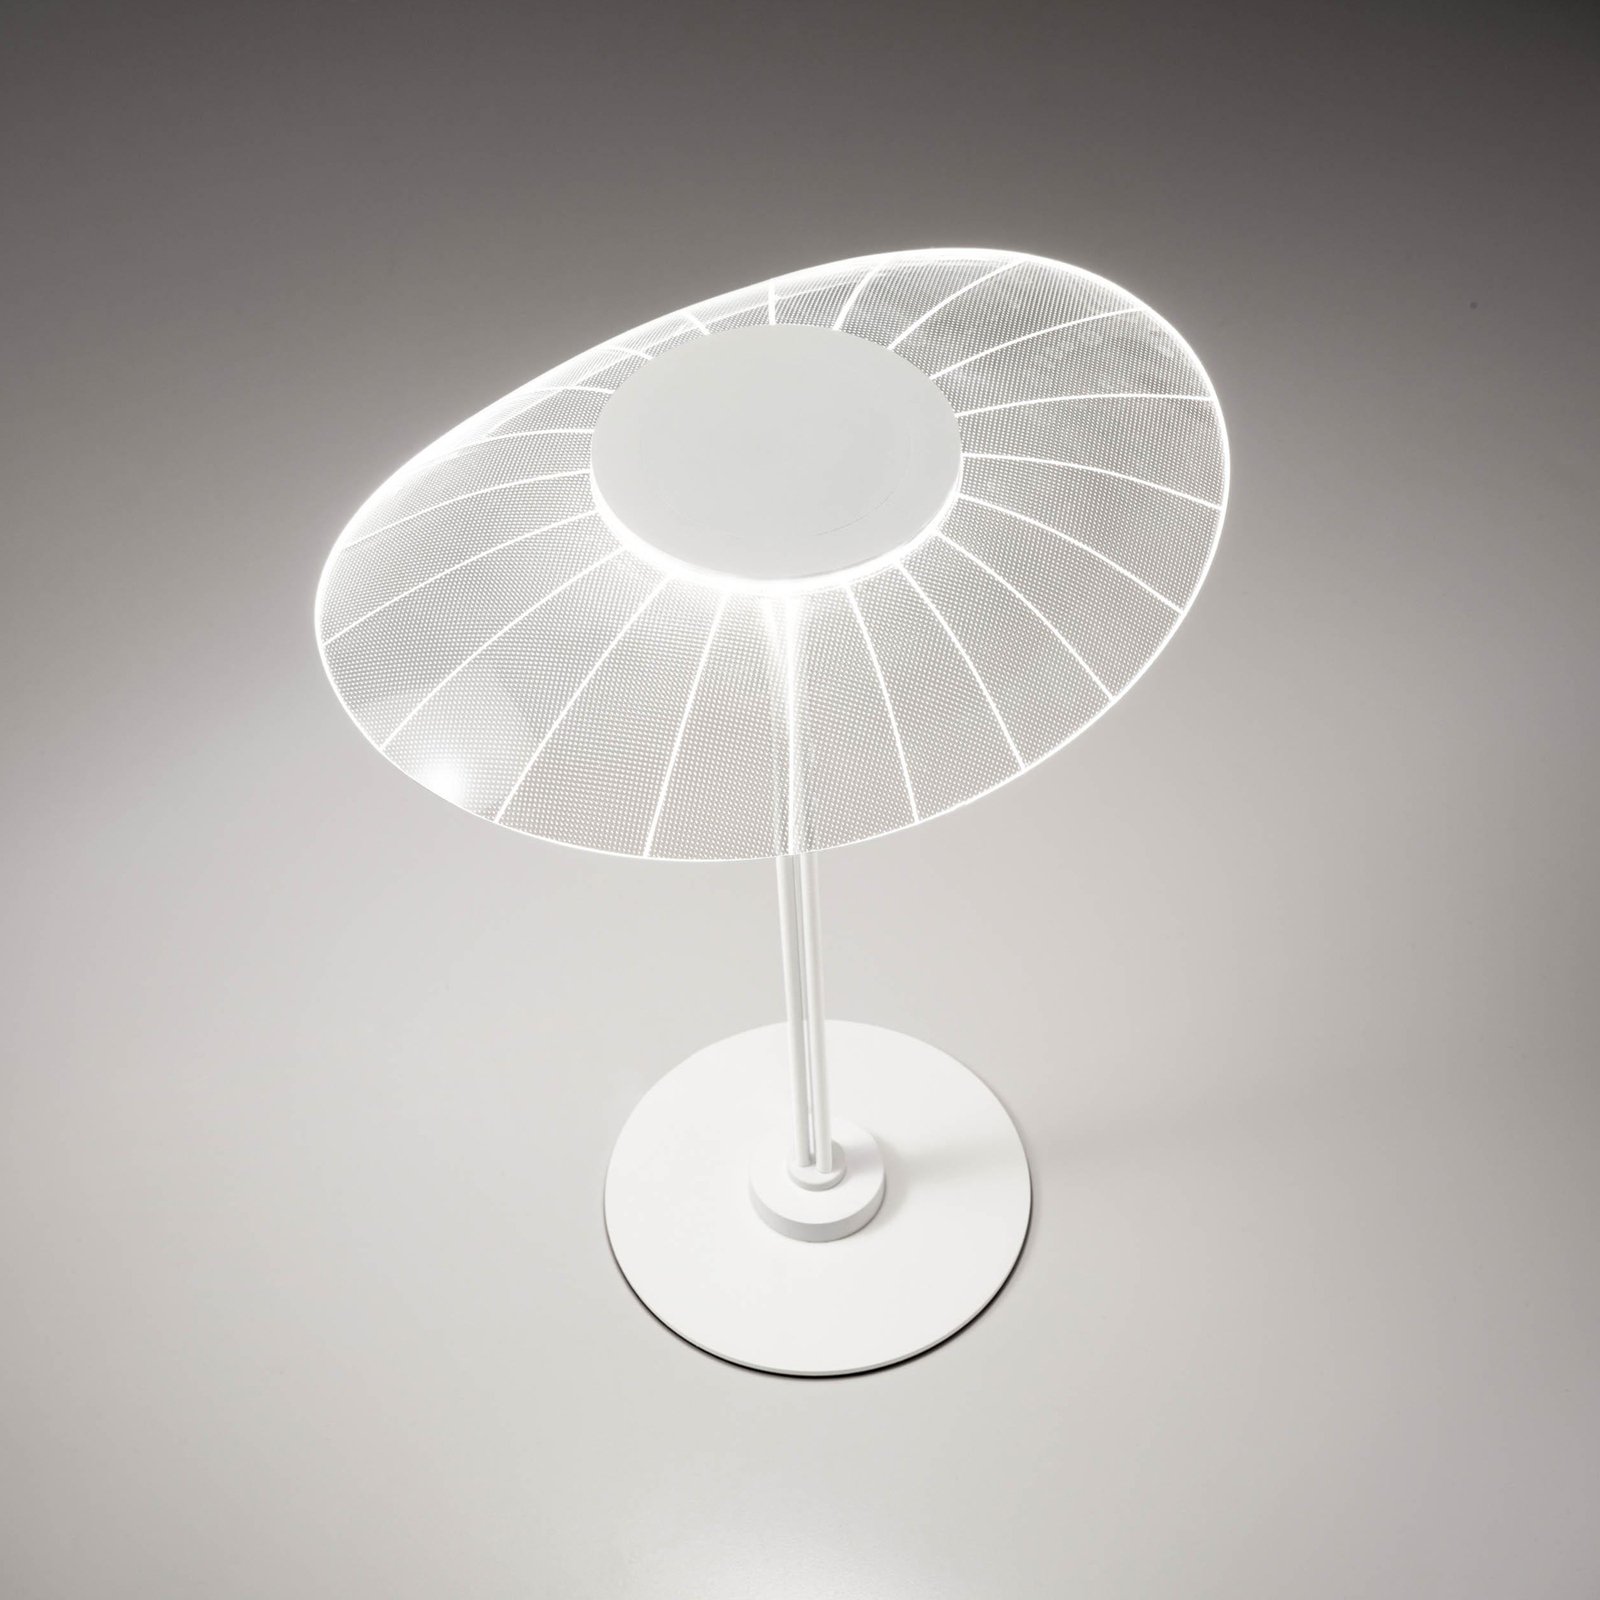 LED tafellamp Vela, wit/transparant, 36cm, acryl, dimmer